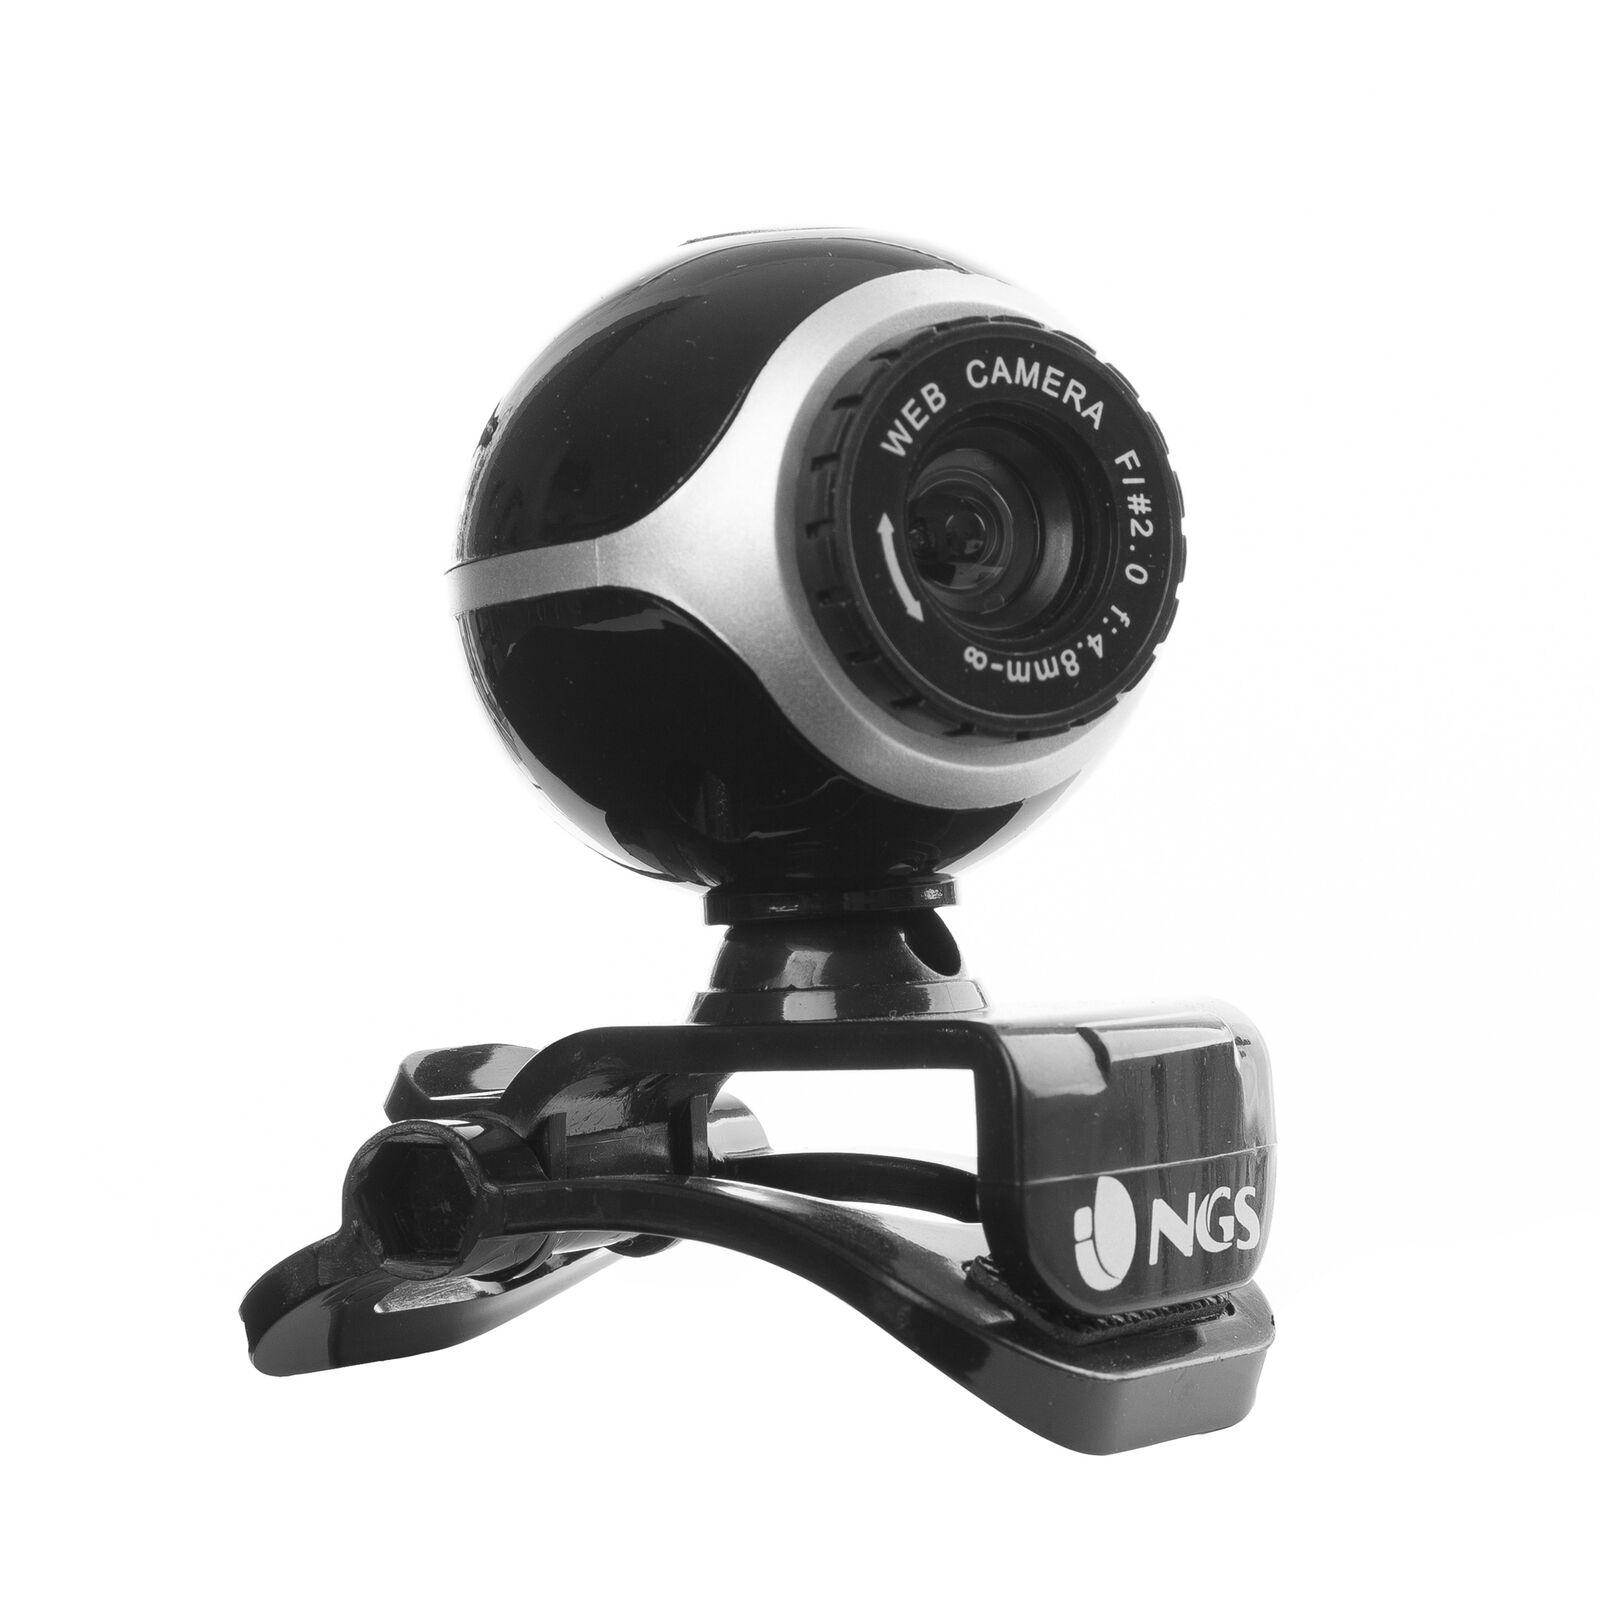 NGS 300K Webcam with Built in Microphone - 3.5mm Jack